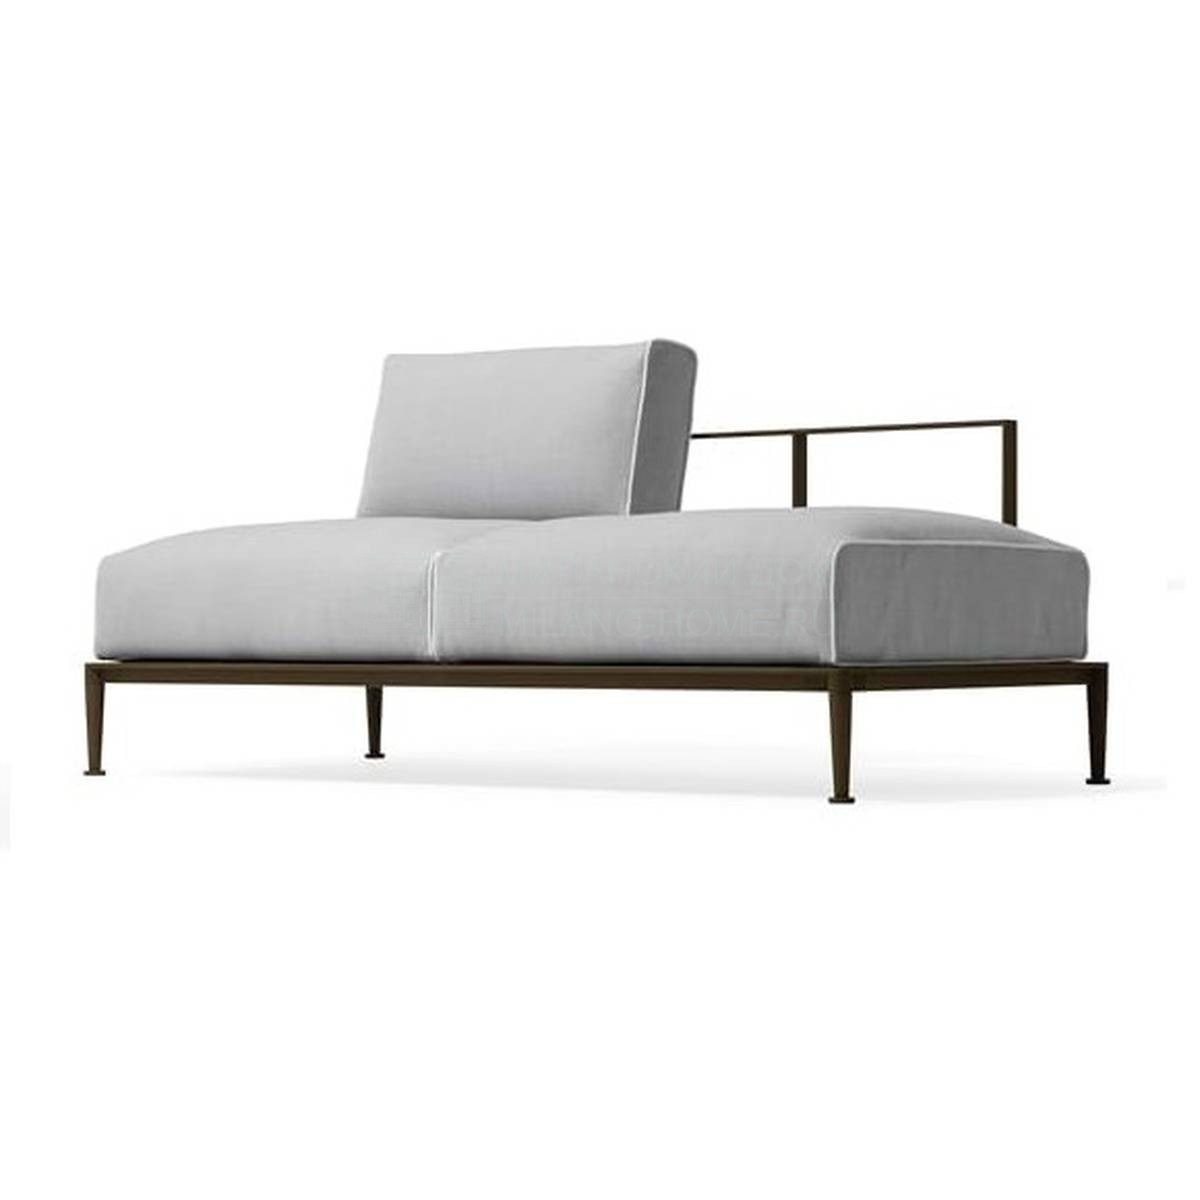 Прямой диван Gea sofa из Италии фабрики GIORGETTI